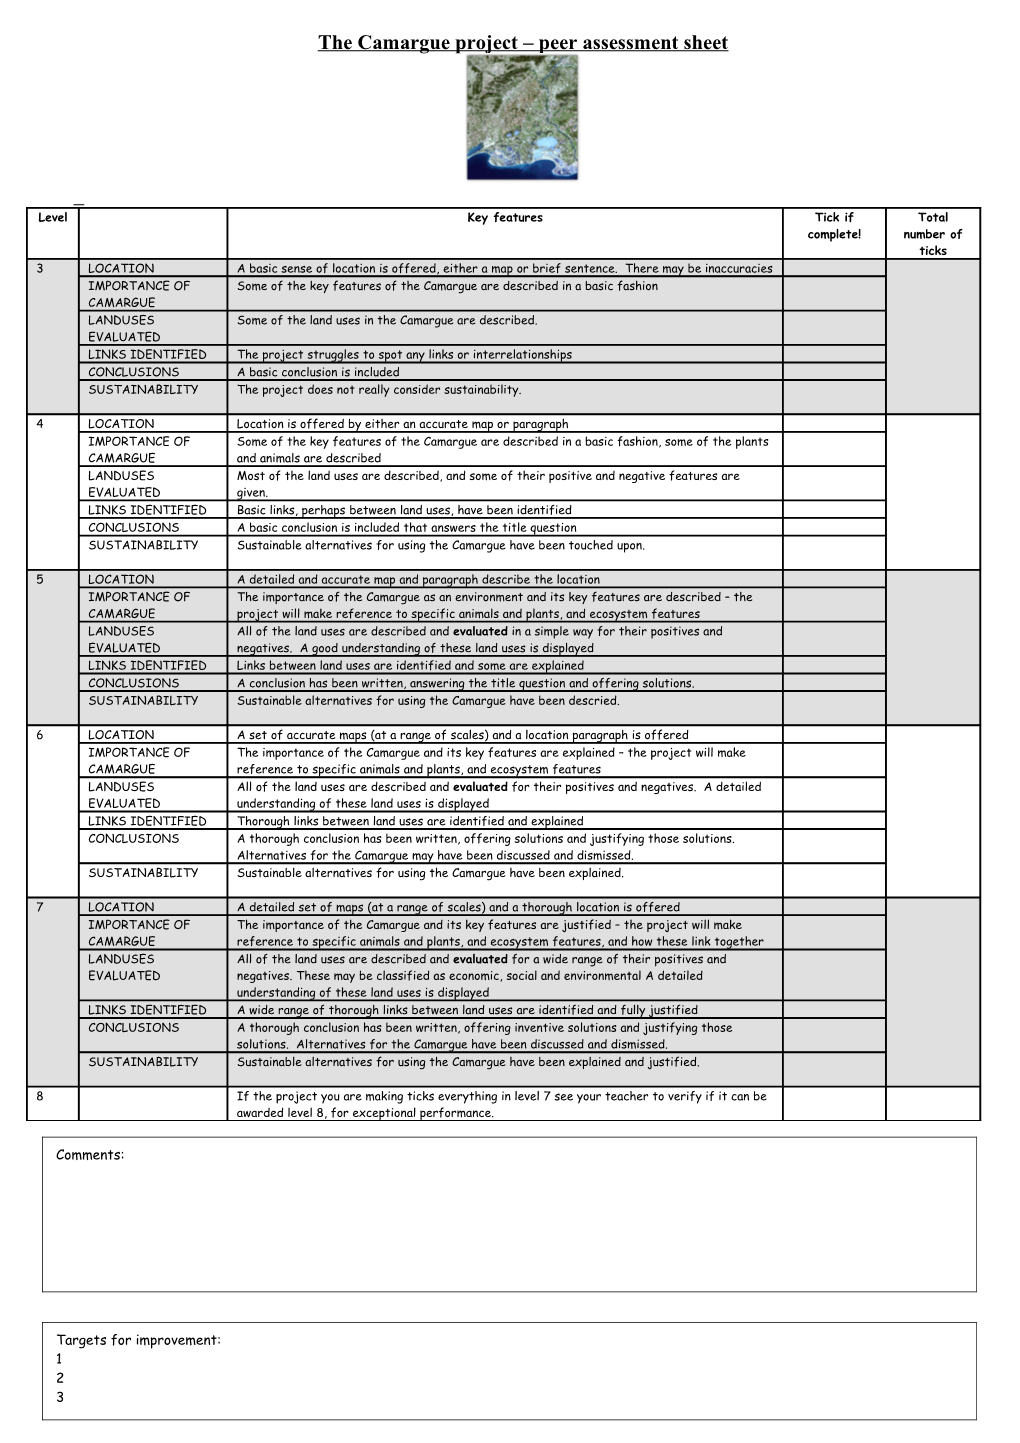 The Camargue Project Peer Assessment Sheet